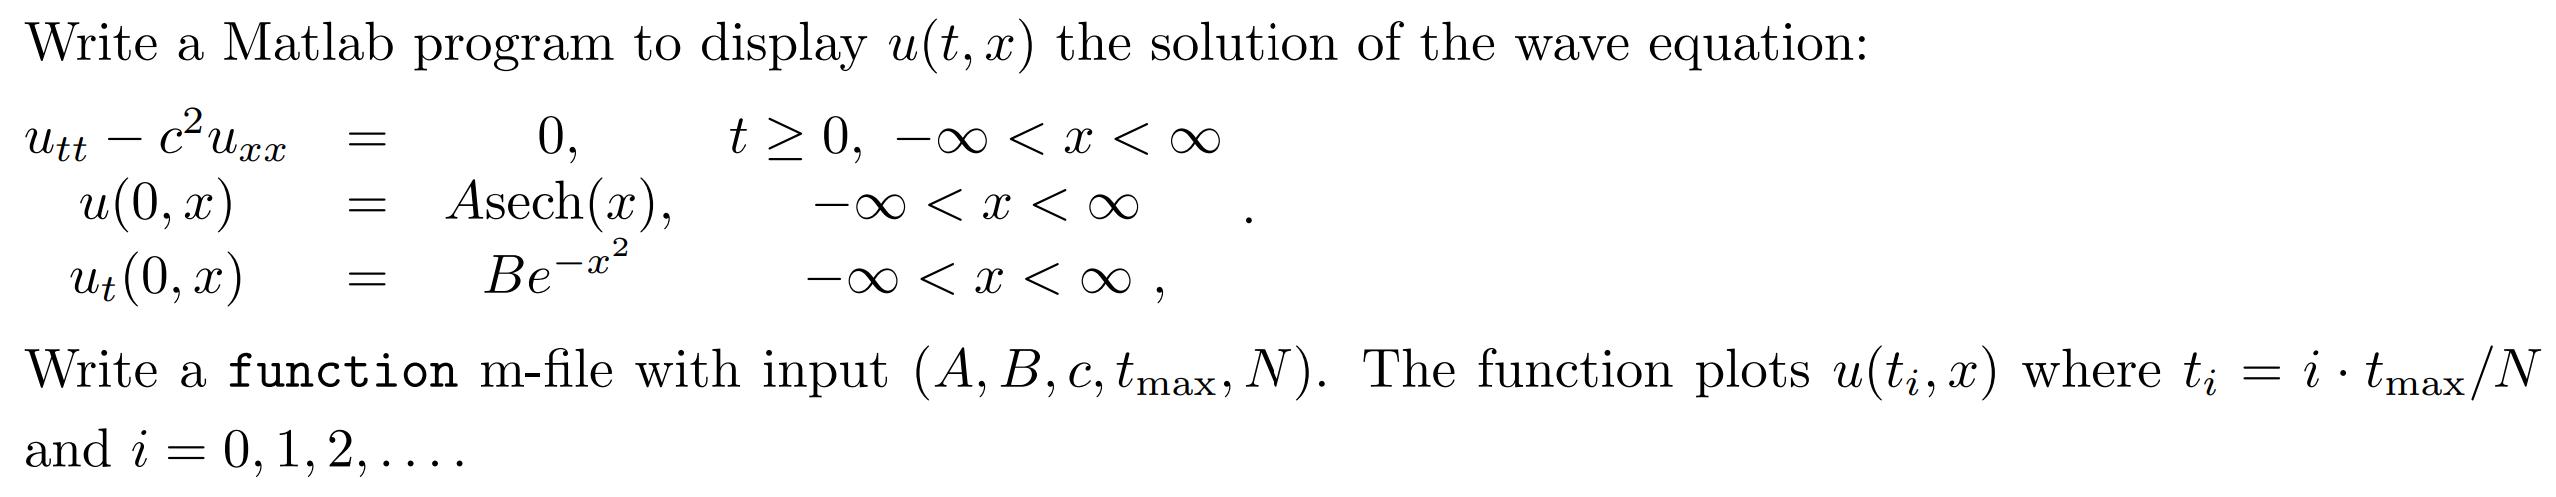 Write a Matlab program to display u(t, x) the solution of the wave equation: Utt - c Uxx u (0, x) ut (0, x) =